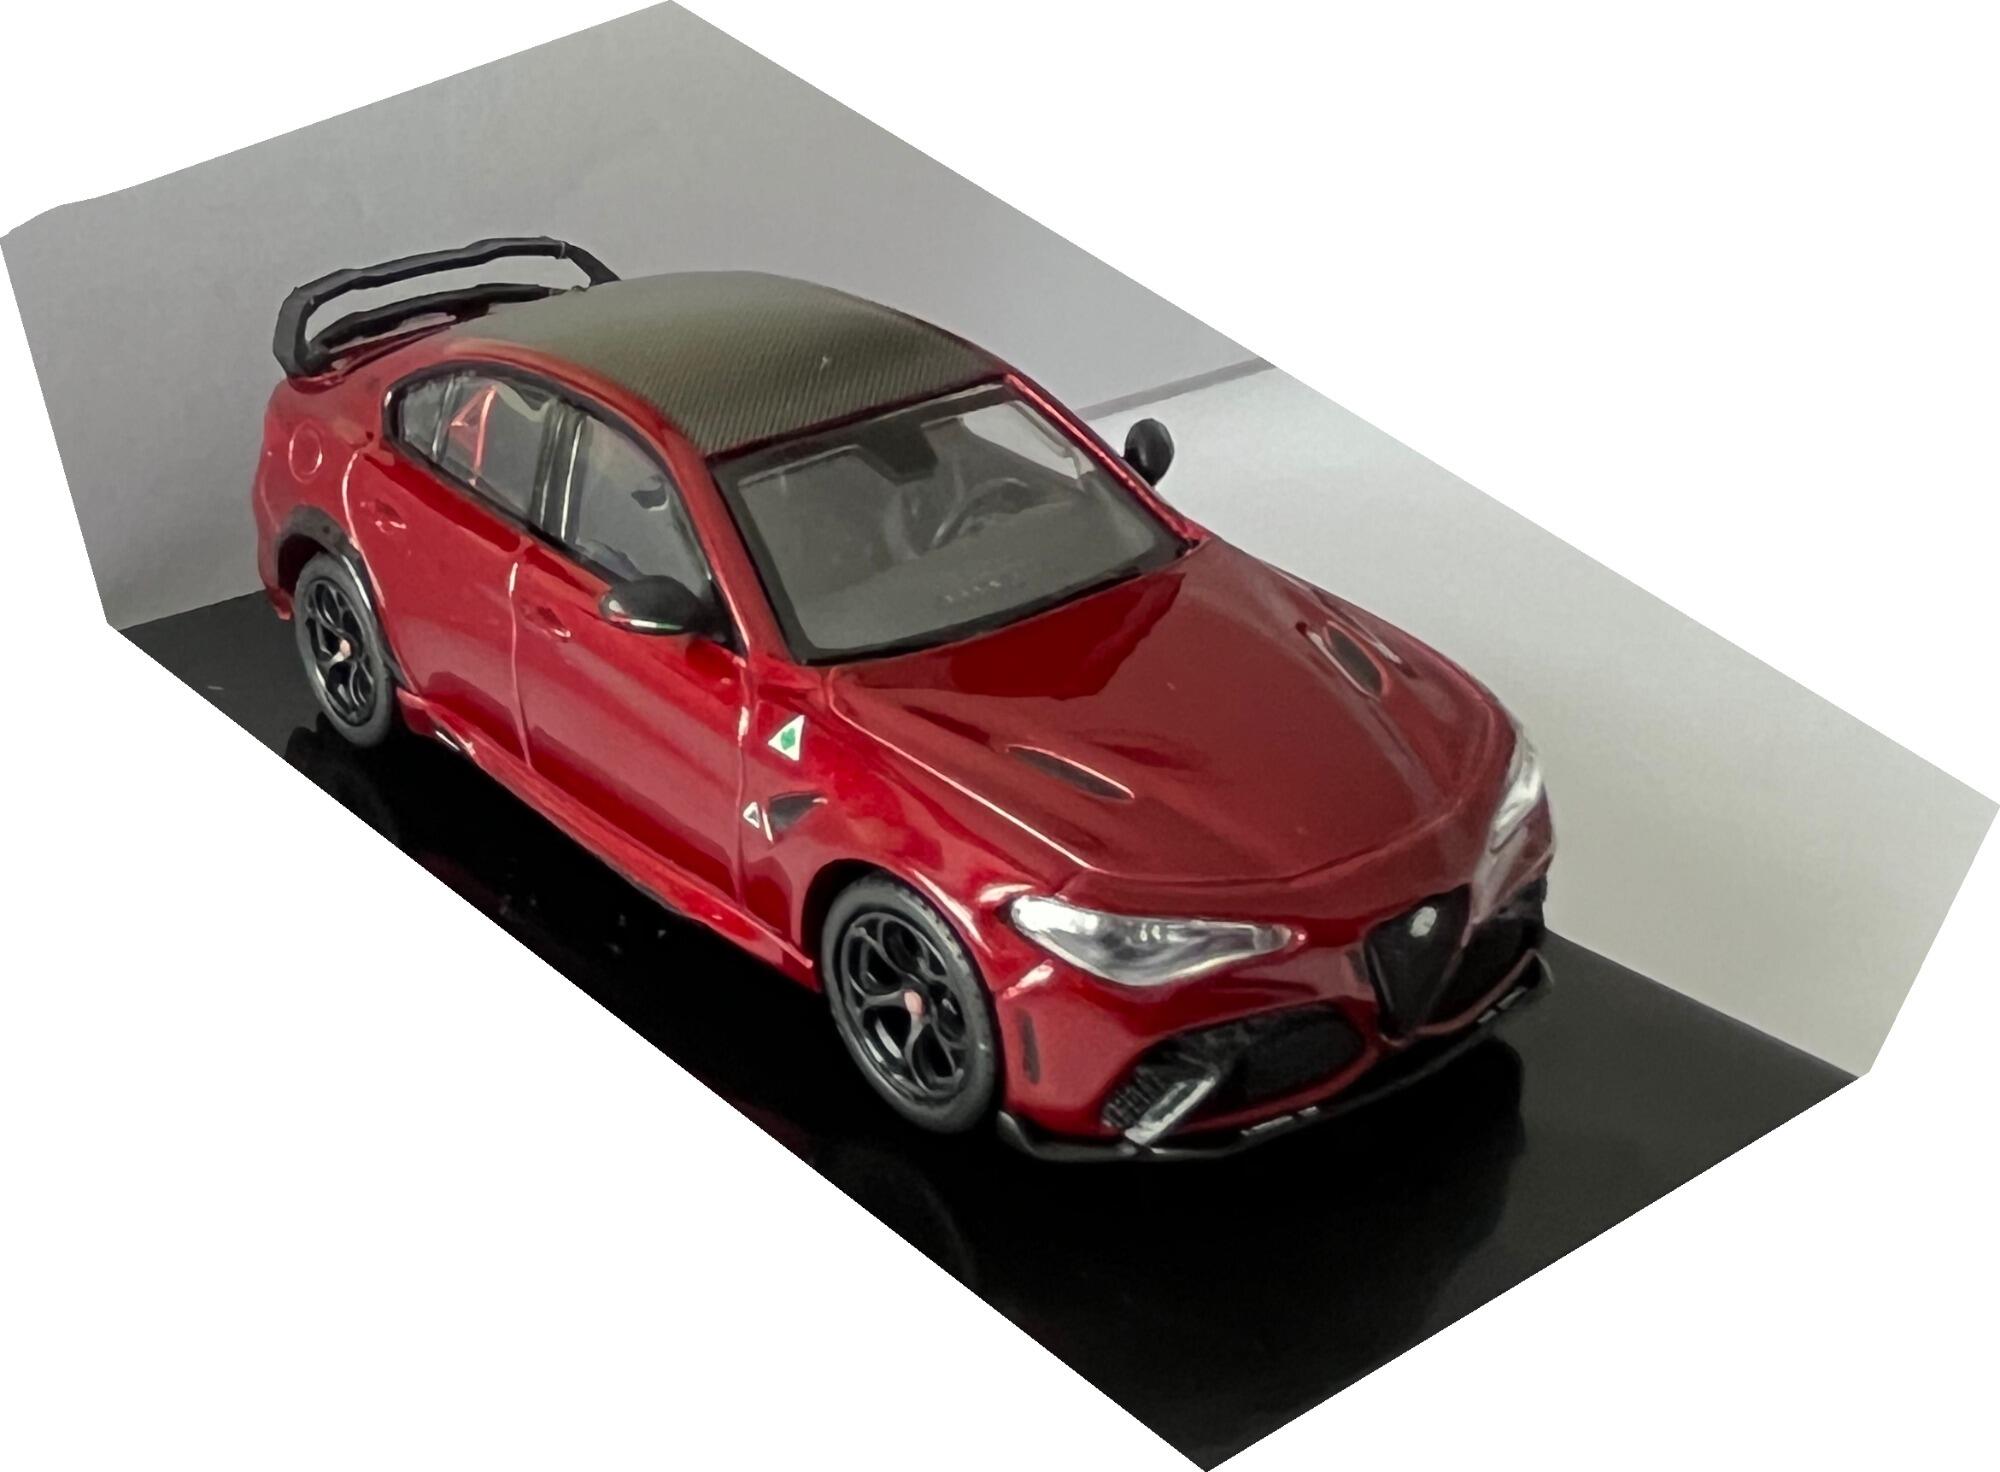 Alfa Romeo GTAm 2020 in metallic red, 1:43 scale diecast car model from Bburago Race, 18-38307